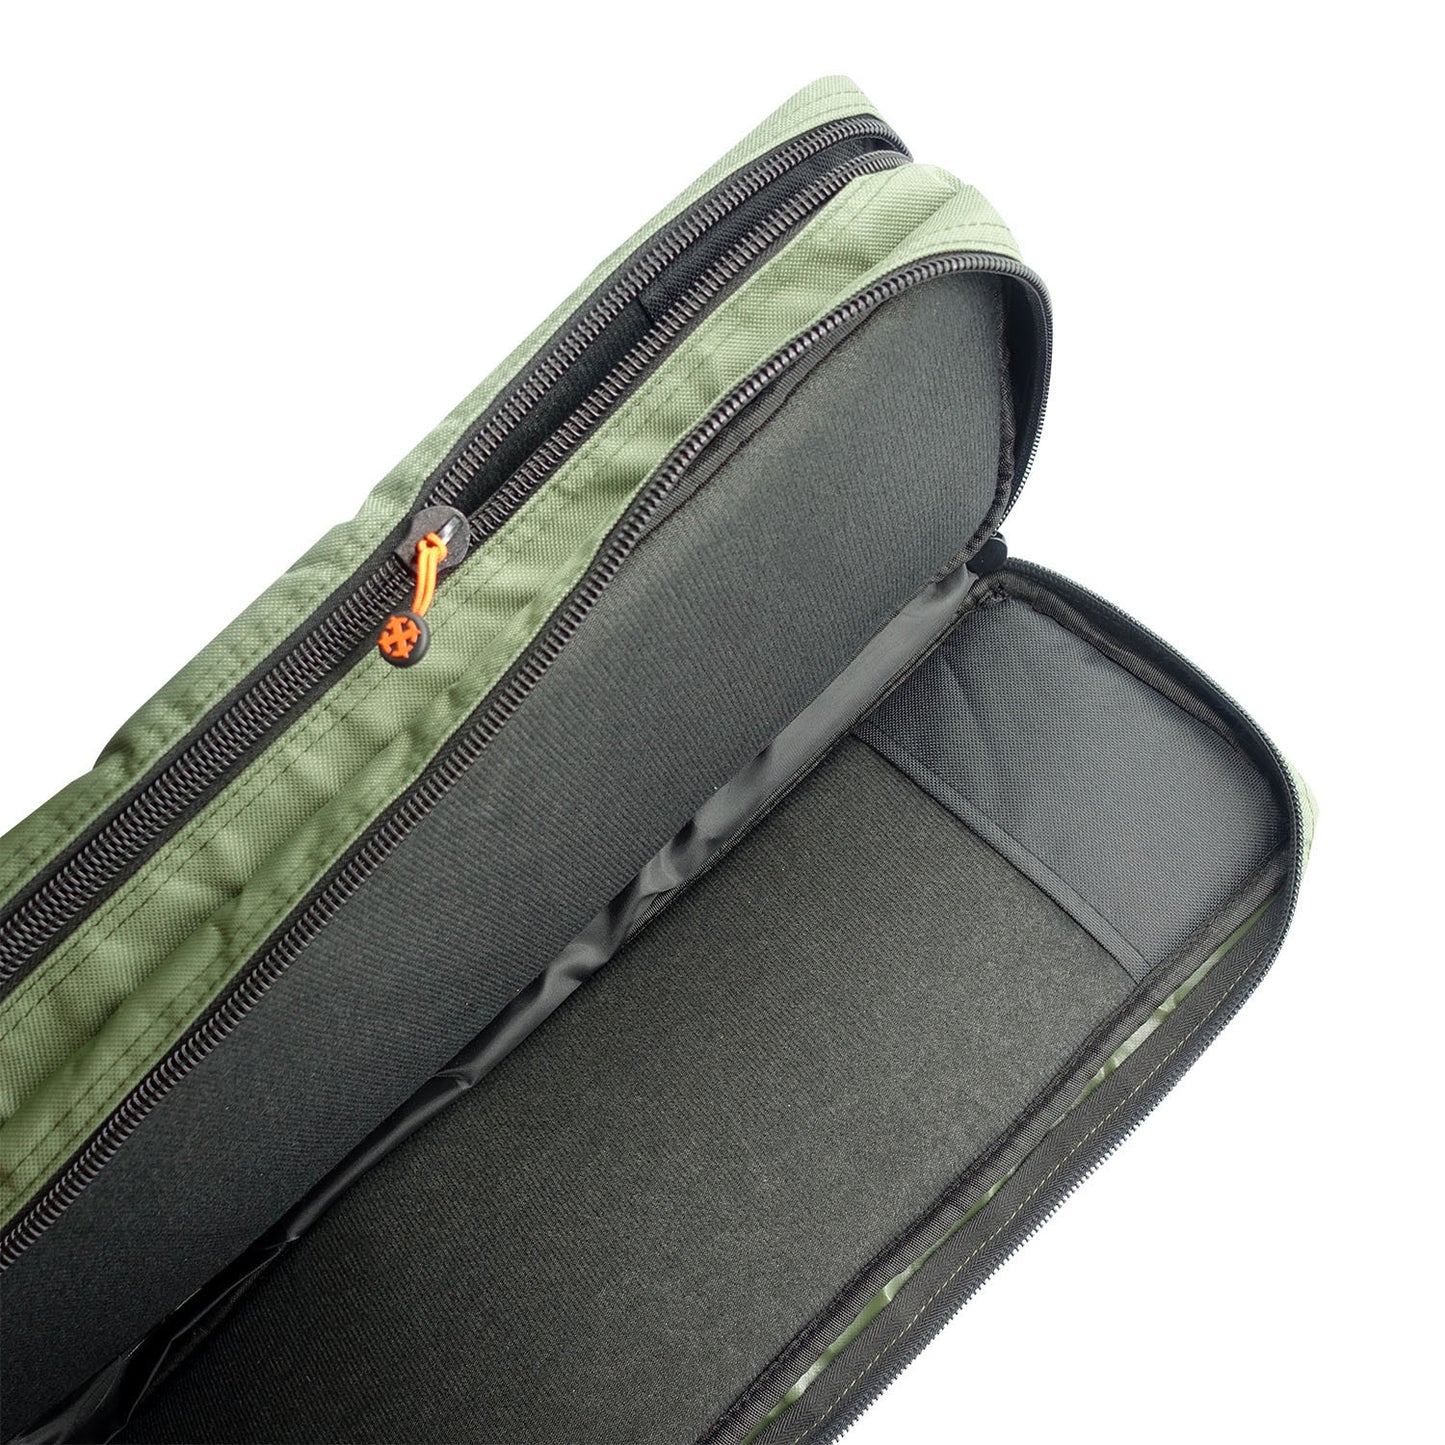 Xhunter Xhunter Double Layer Rifle Bag - 48 Inch Long #00505 Dim Gray